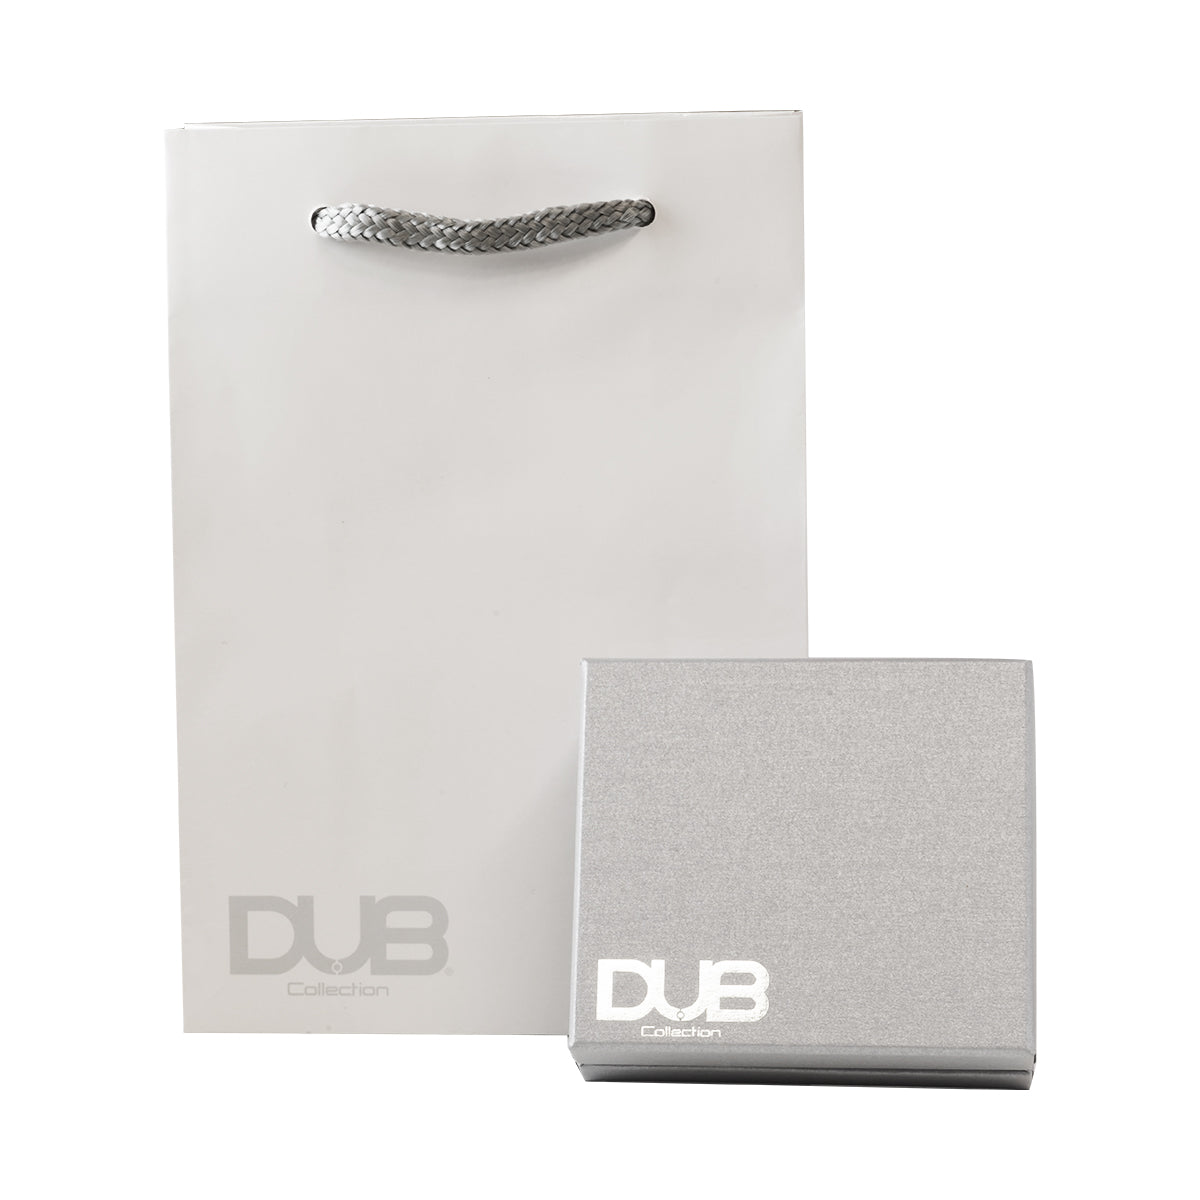 DUBj-266-1 Double face Cross Necklace SILVER | DUB Collection